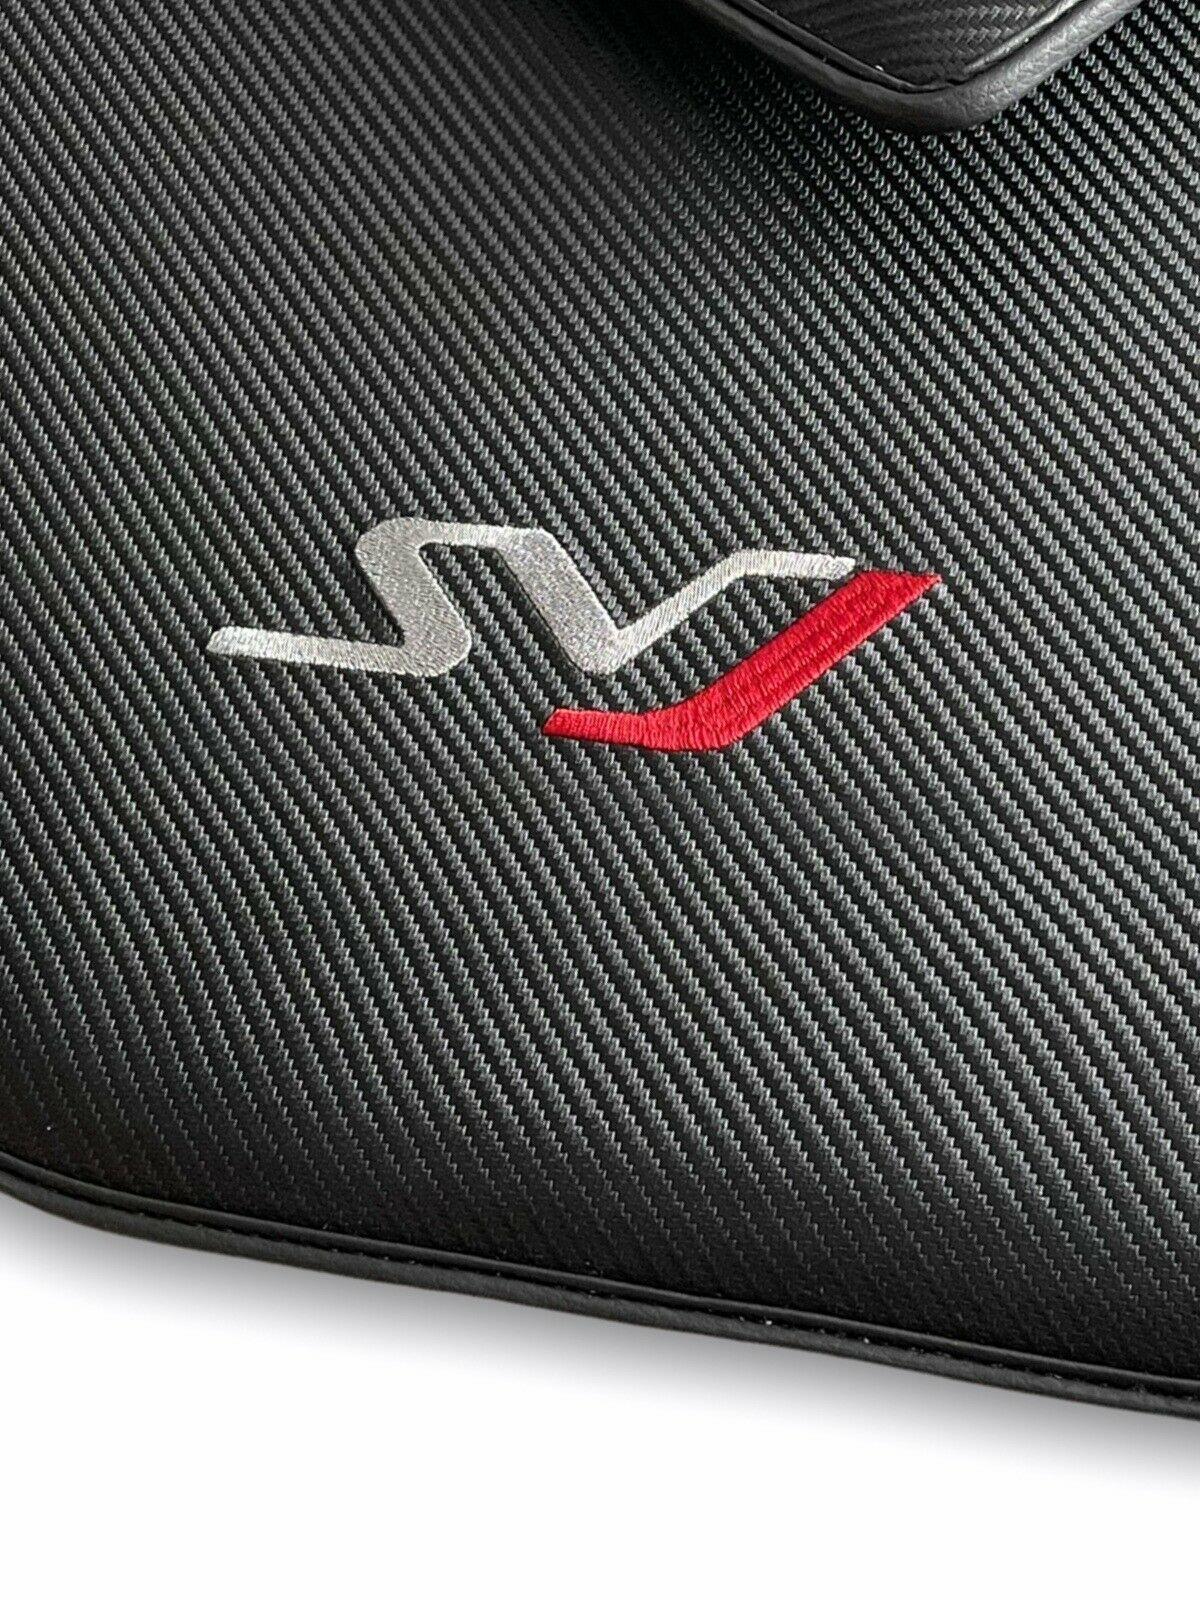 Floor Mats for Lamborghini Aventador Svj Leather Carbon Limited Edition - AutoWin